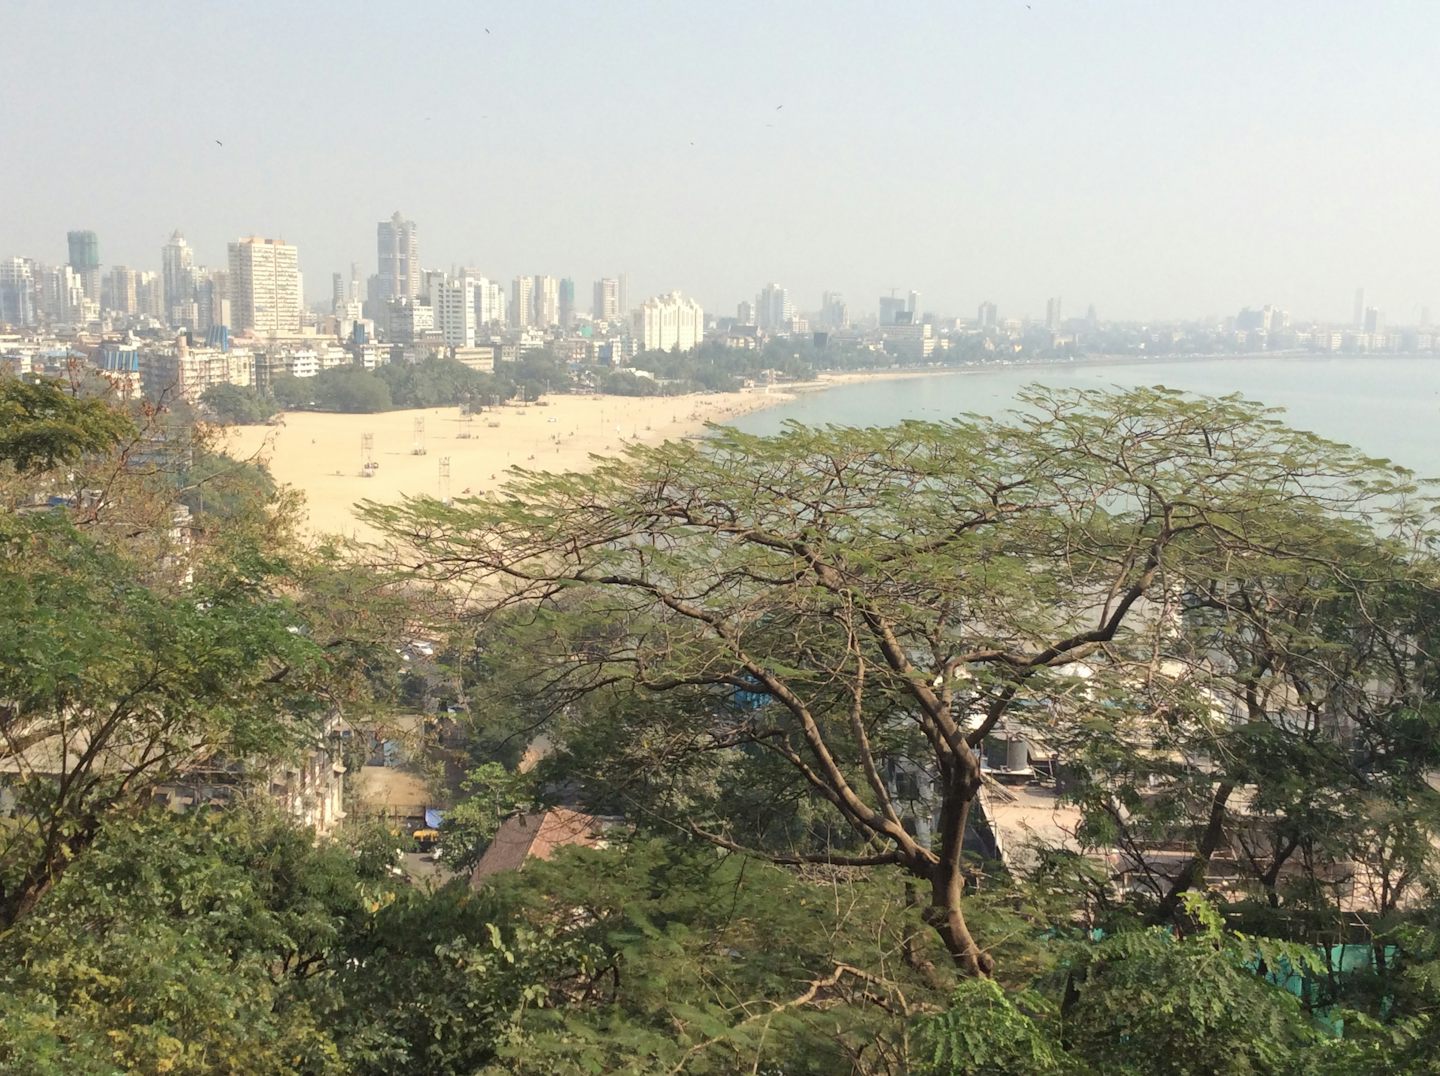 View of Mumbai beach from the park